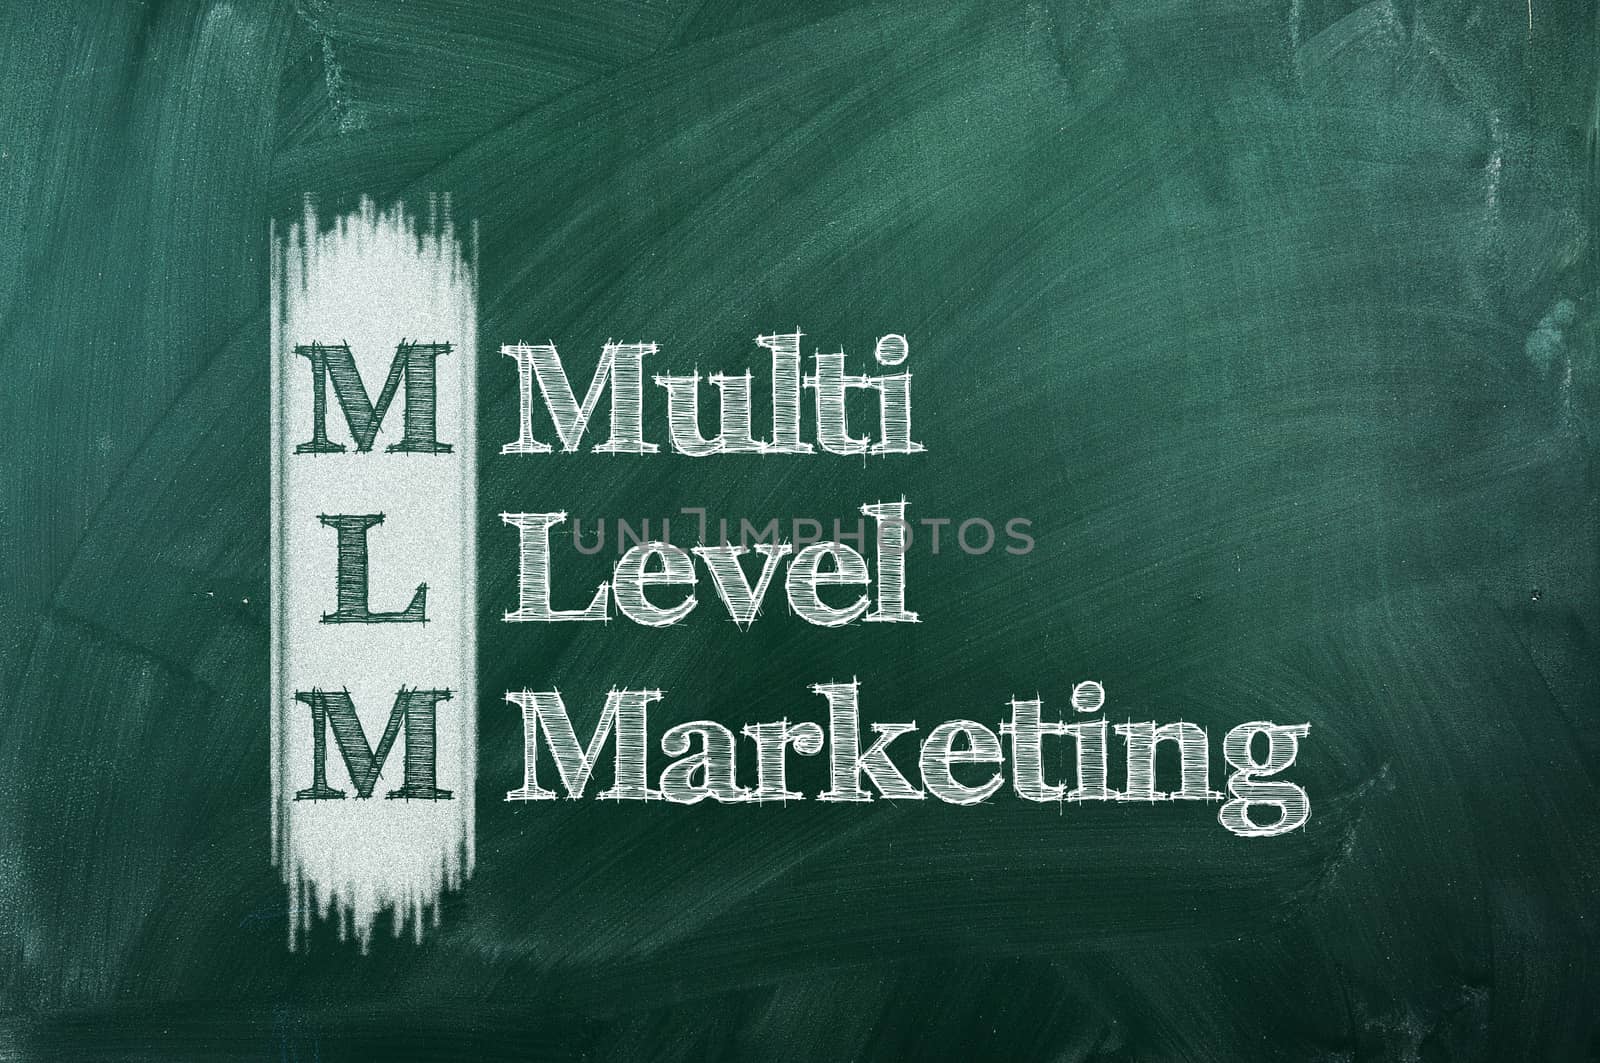 mlm - multi level marketing on green chalkboard